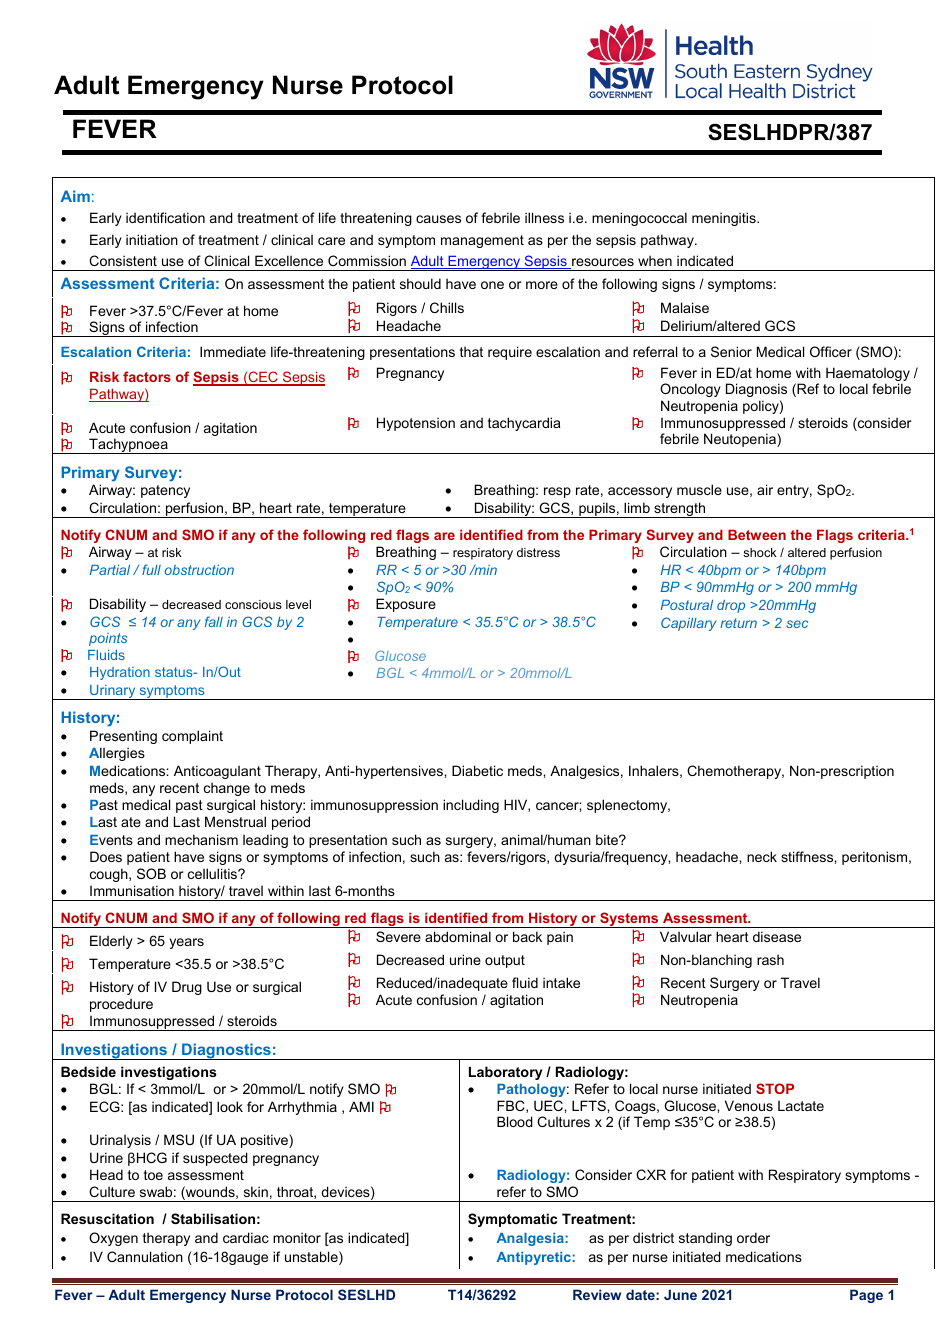 Adult Emergency Nurse Protocol - Fever - New South Wales, Australia, Page 1